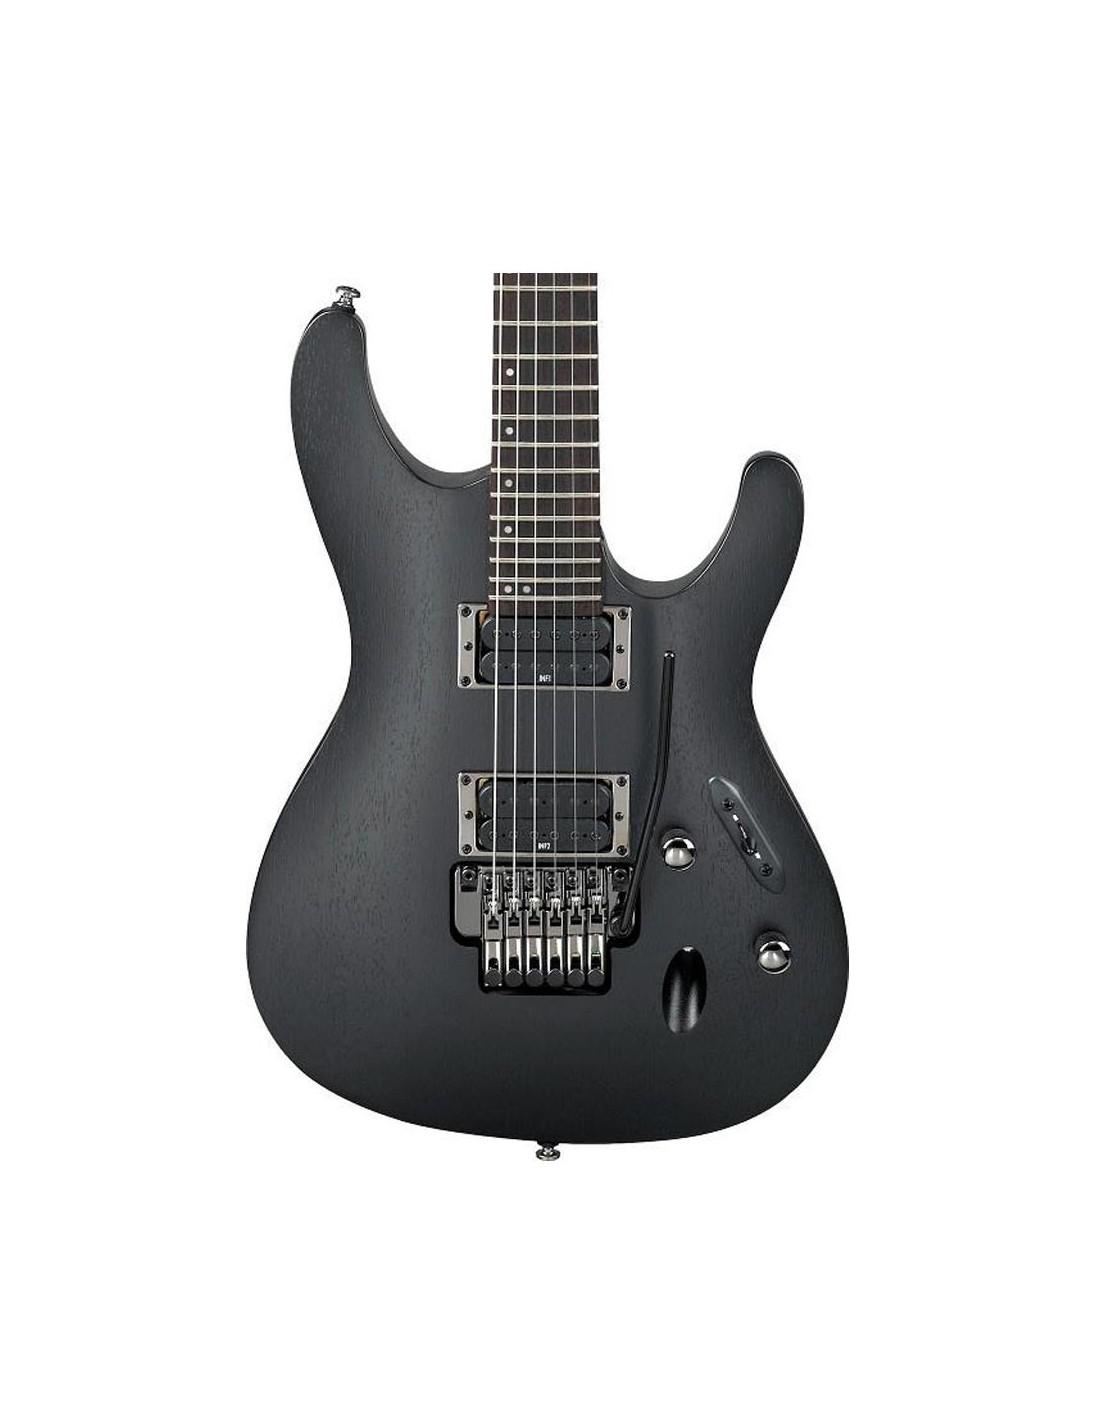 Ibañez - Guitarra Eléctrica S, Color: Negro Veteado Mod.S520-WK_89